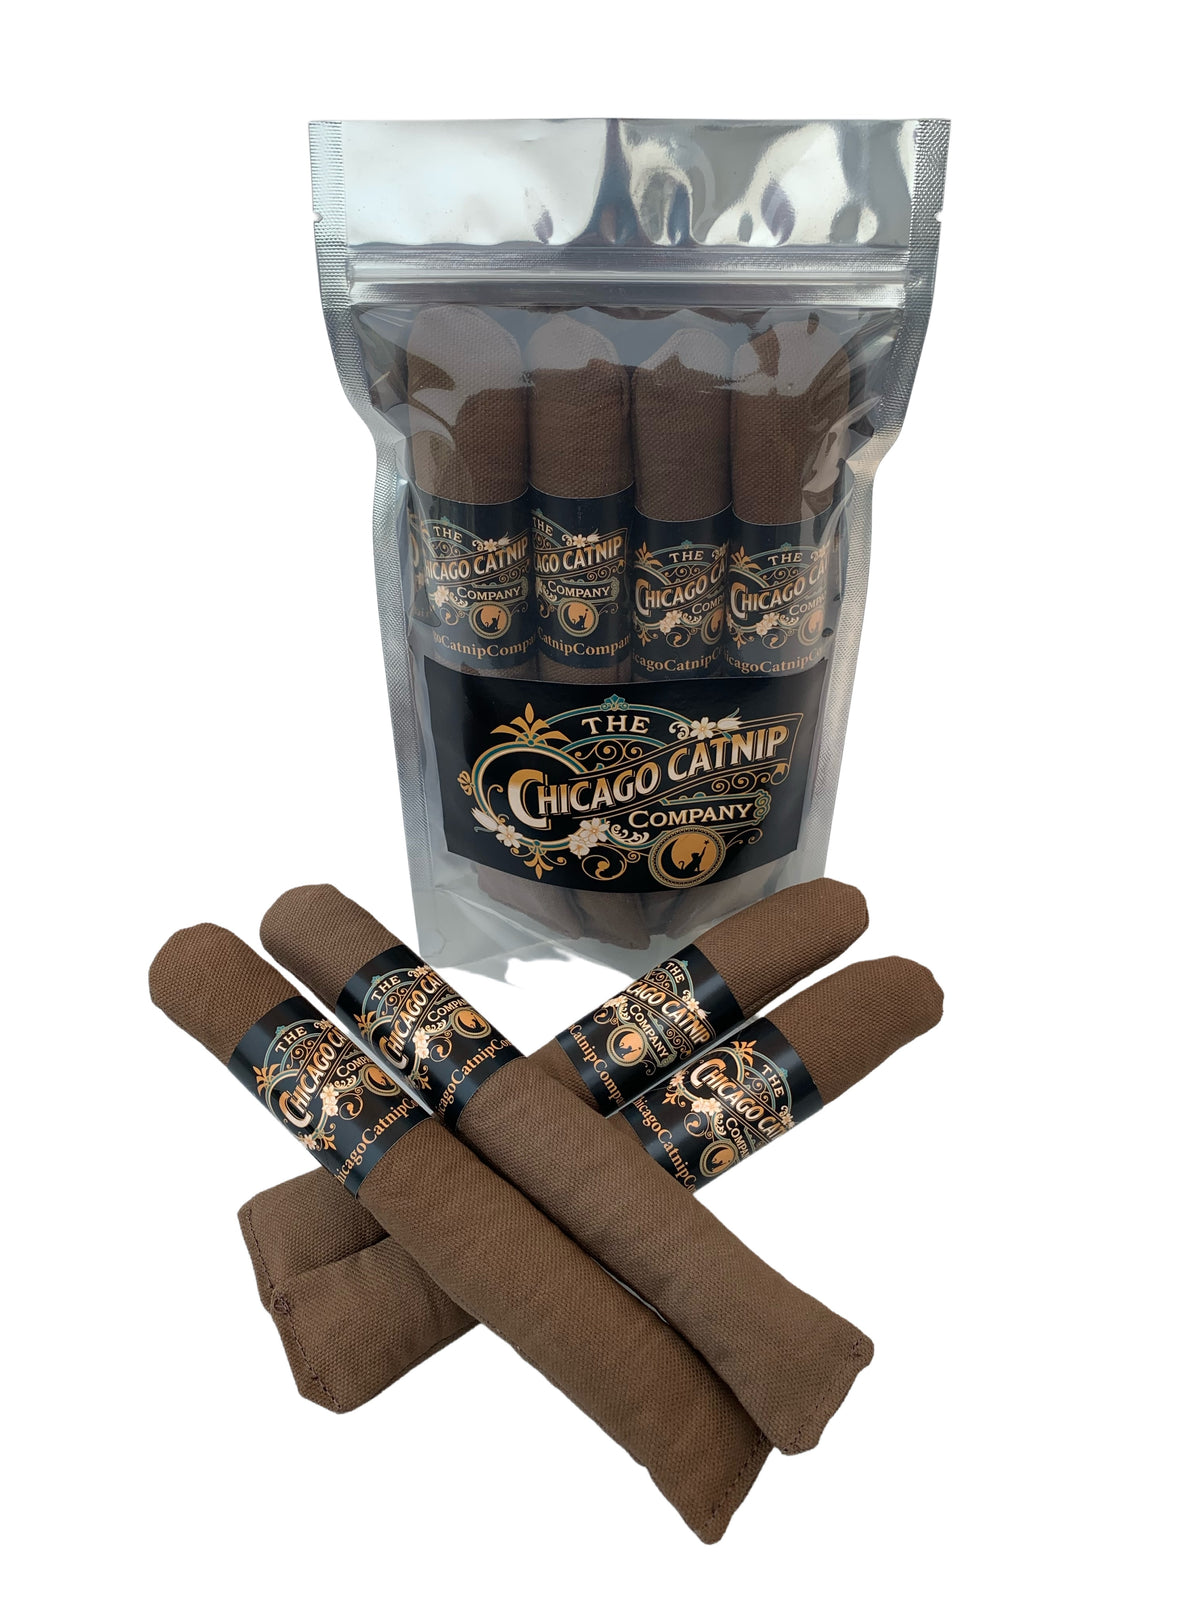 Cigars 4 Premium Handmade Catnip Cigars in Foil Pouch